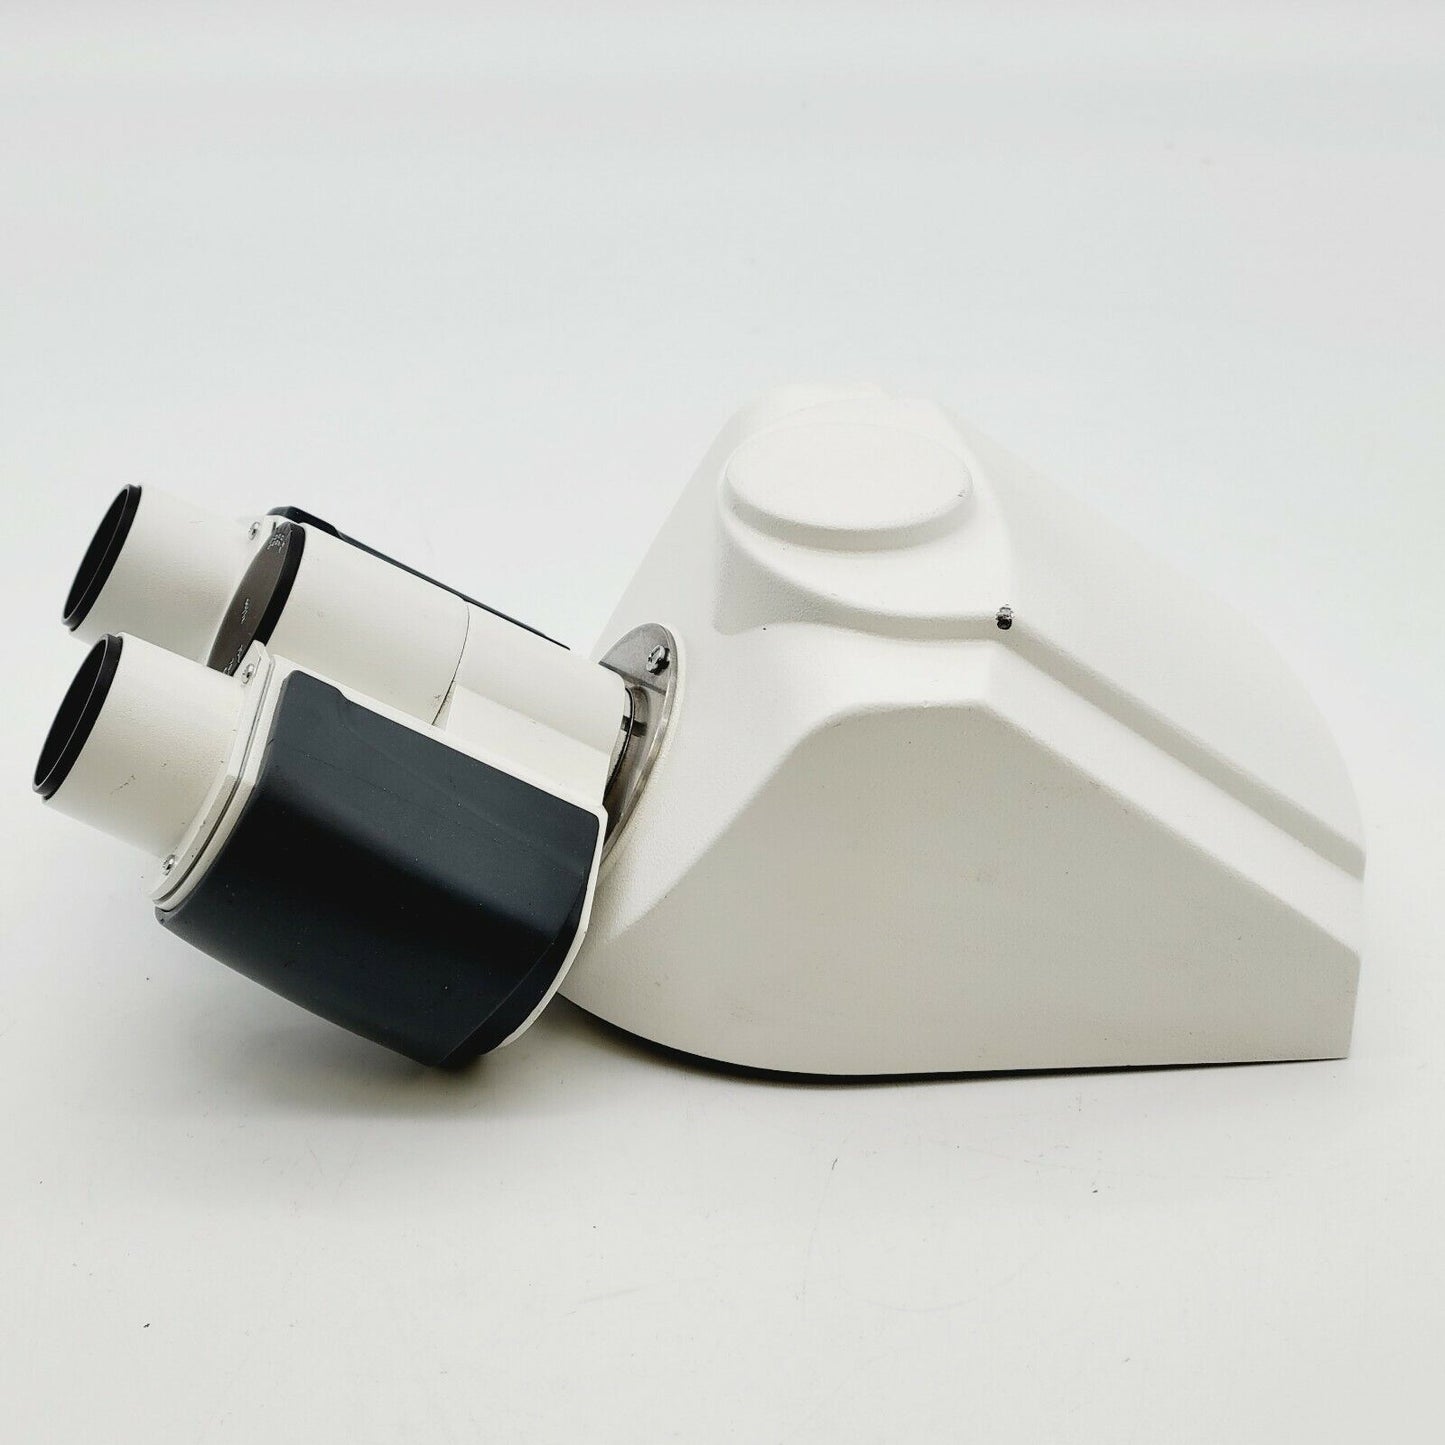 Zeiss Microscope Binocular Head Tube 425500 AXIO - microscopemarketplace